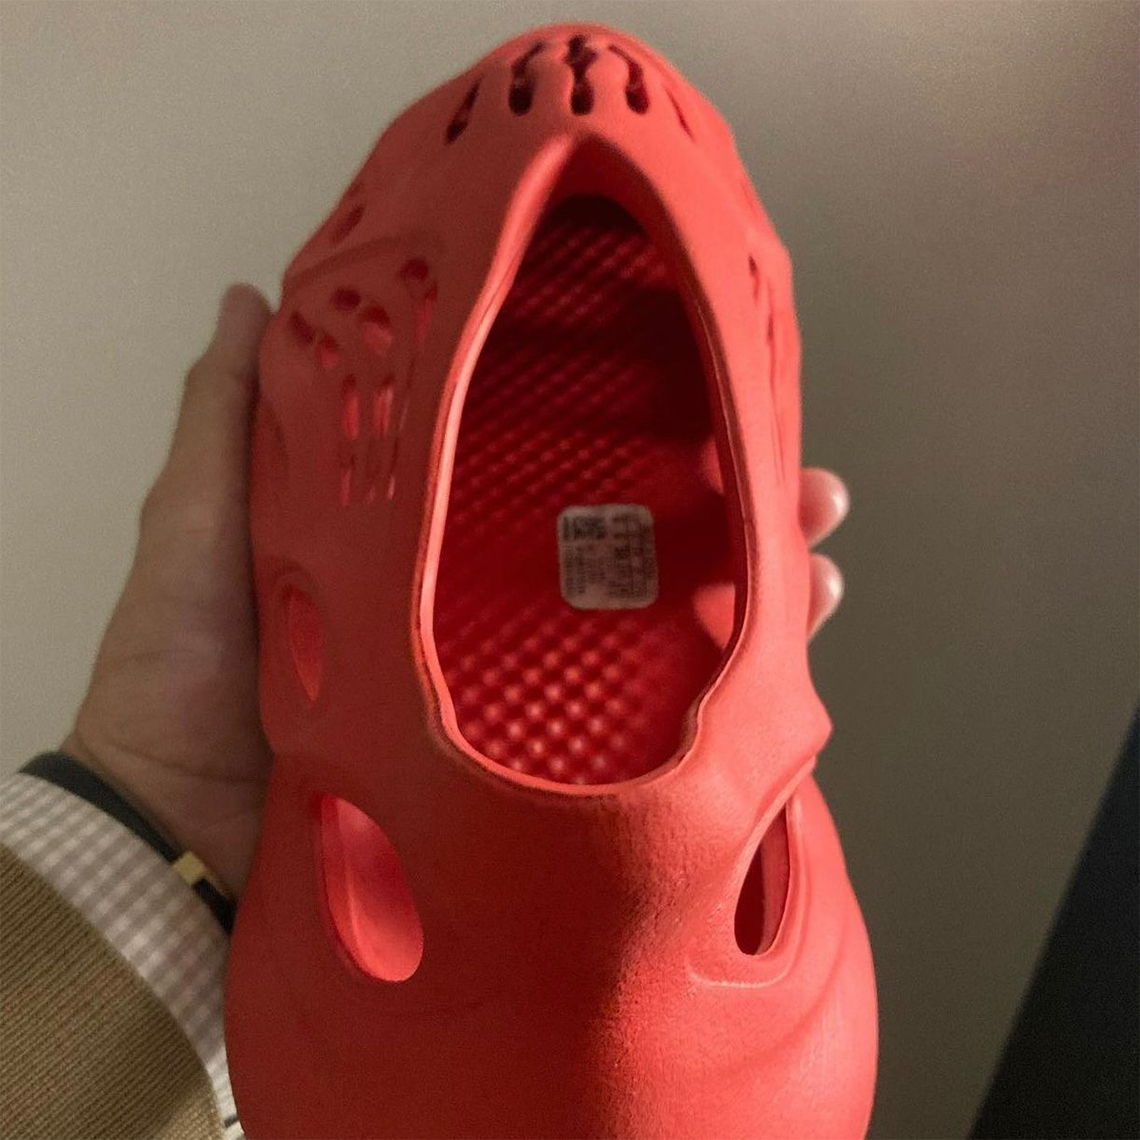 adidas yeezy foam runner vermillion red release date 3